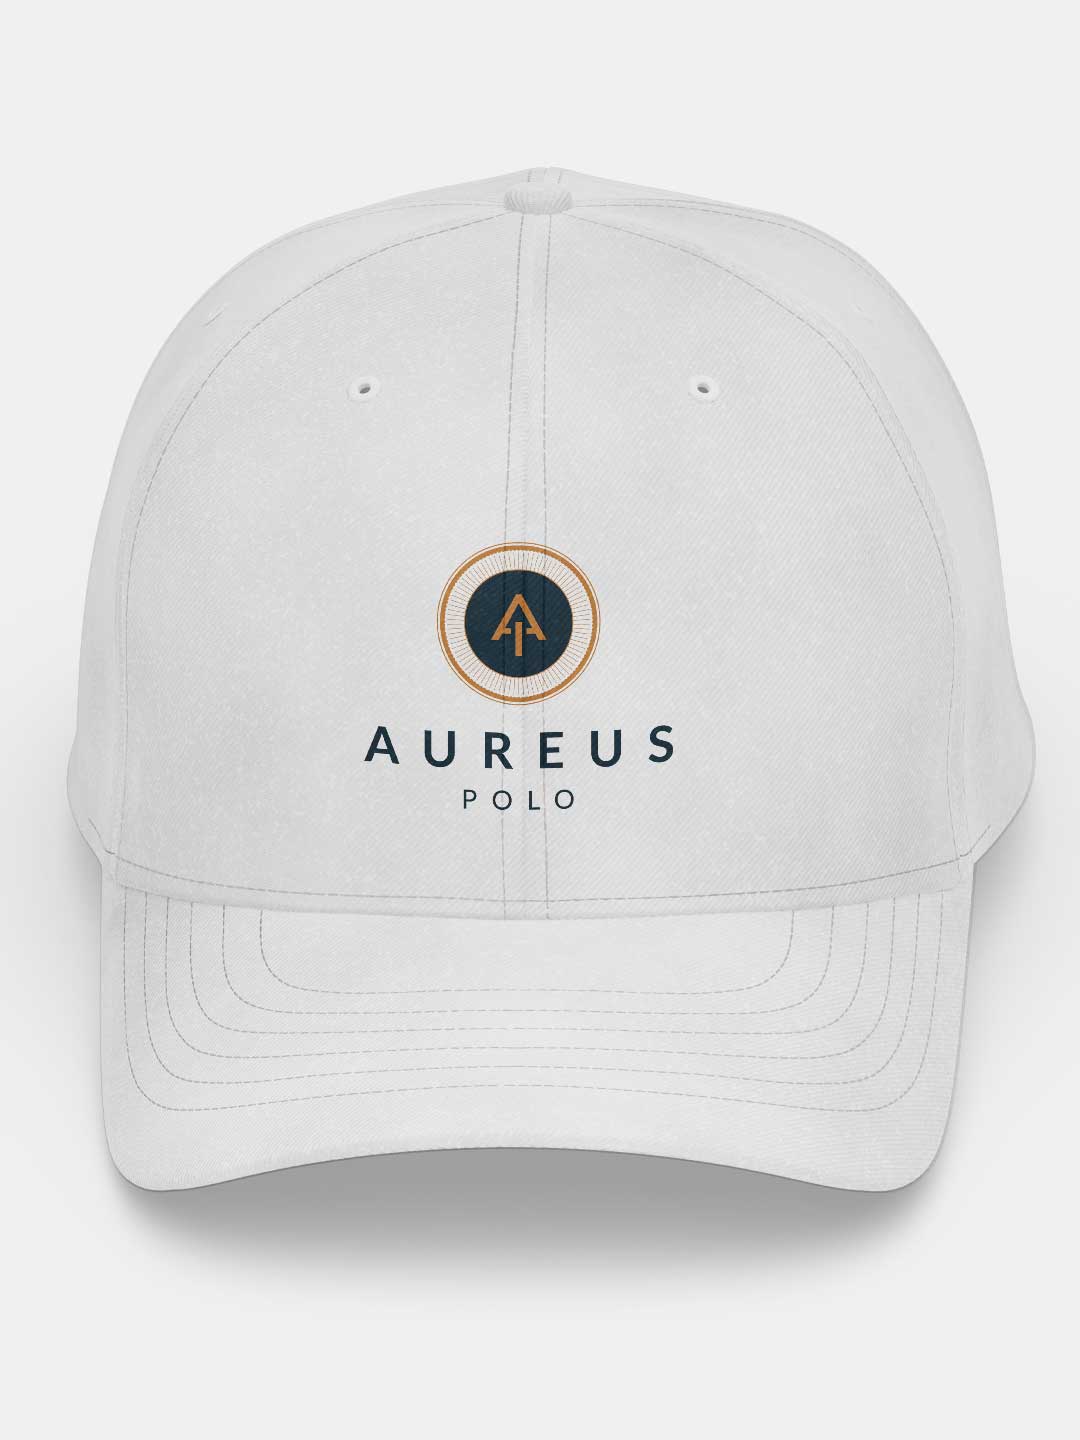 Buy Aureus Polo Vertical - Baseball Cap - White - Free Size Cap Online